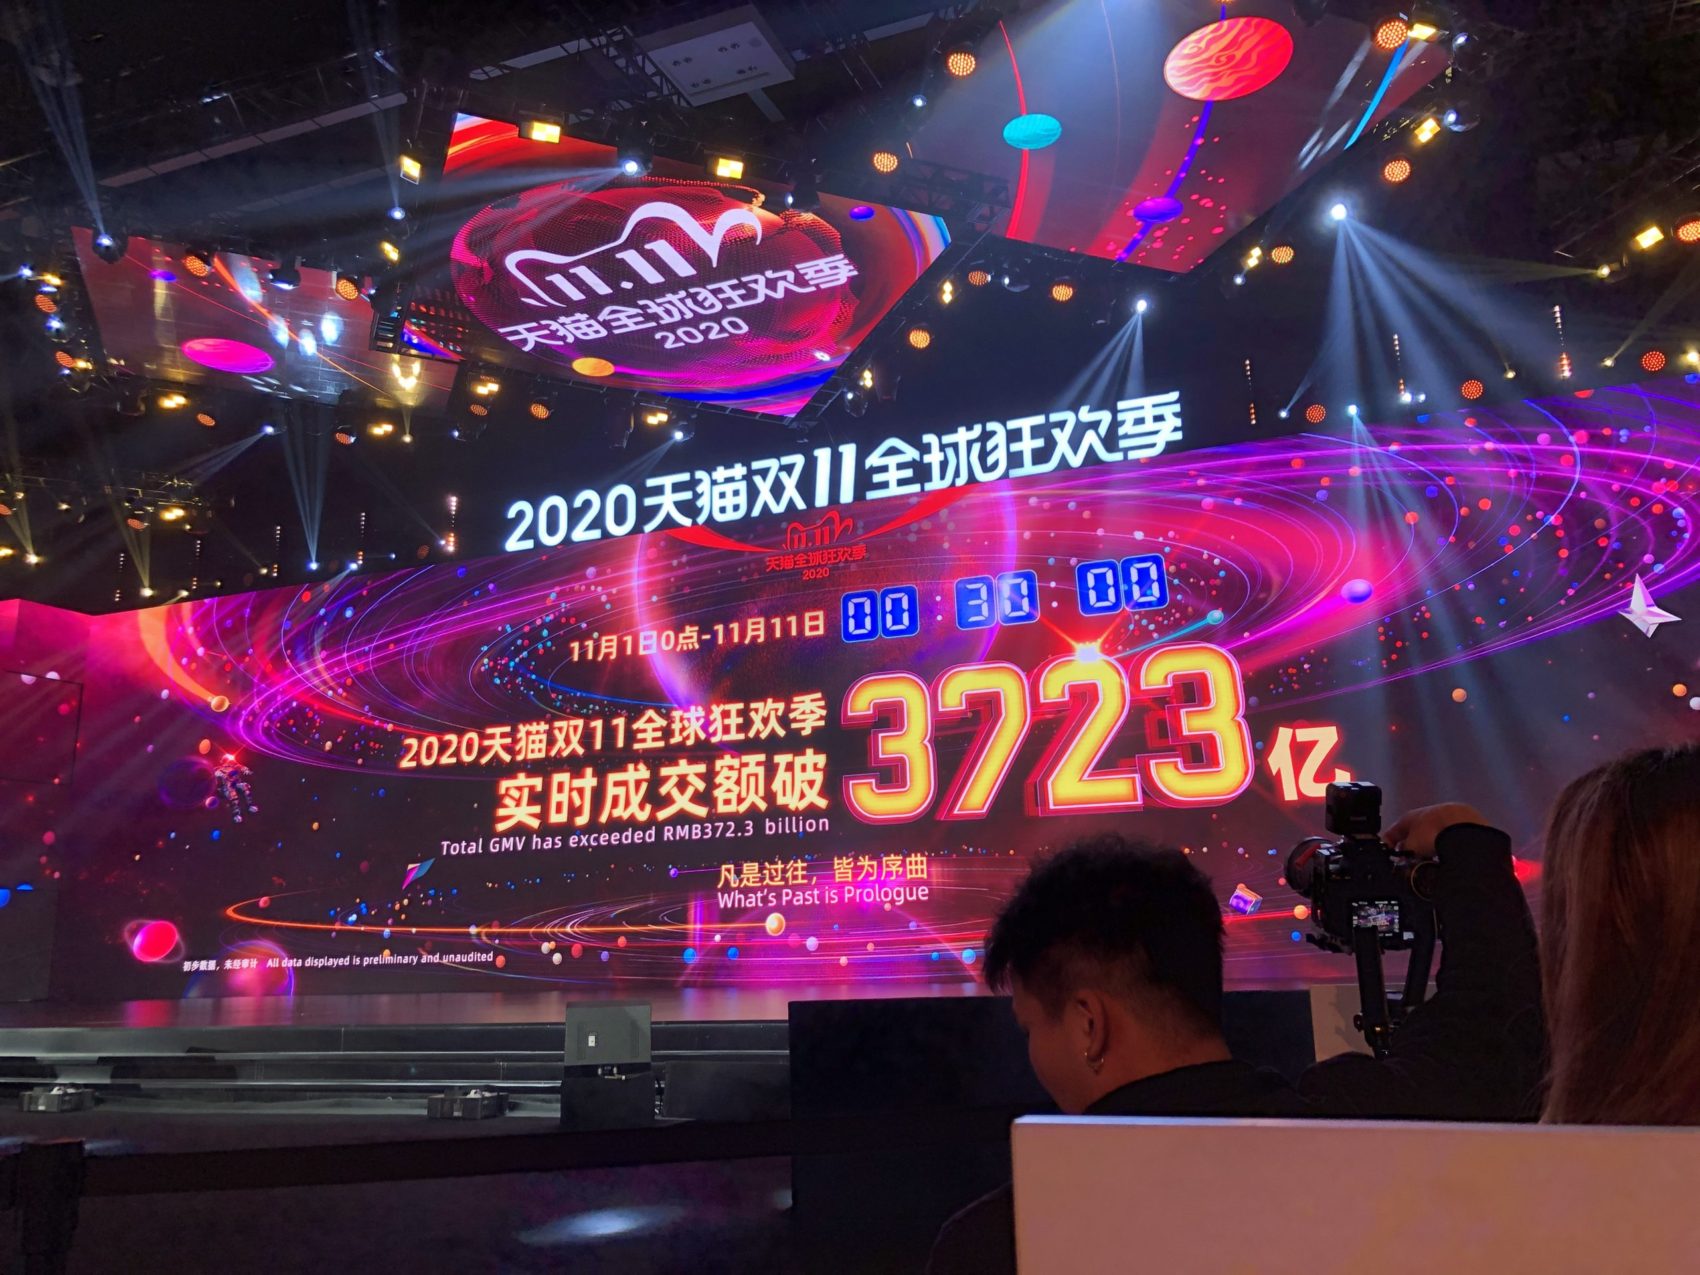 Singles Day China 2020 - Rekordverdächtigingles' Day China 2020 - Rekordverdächtig